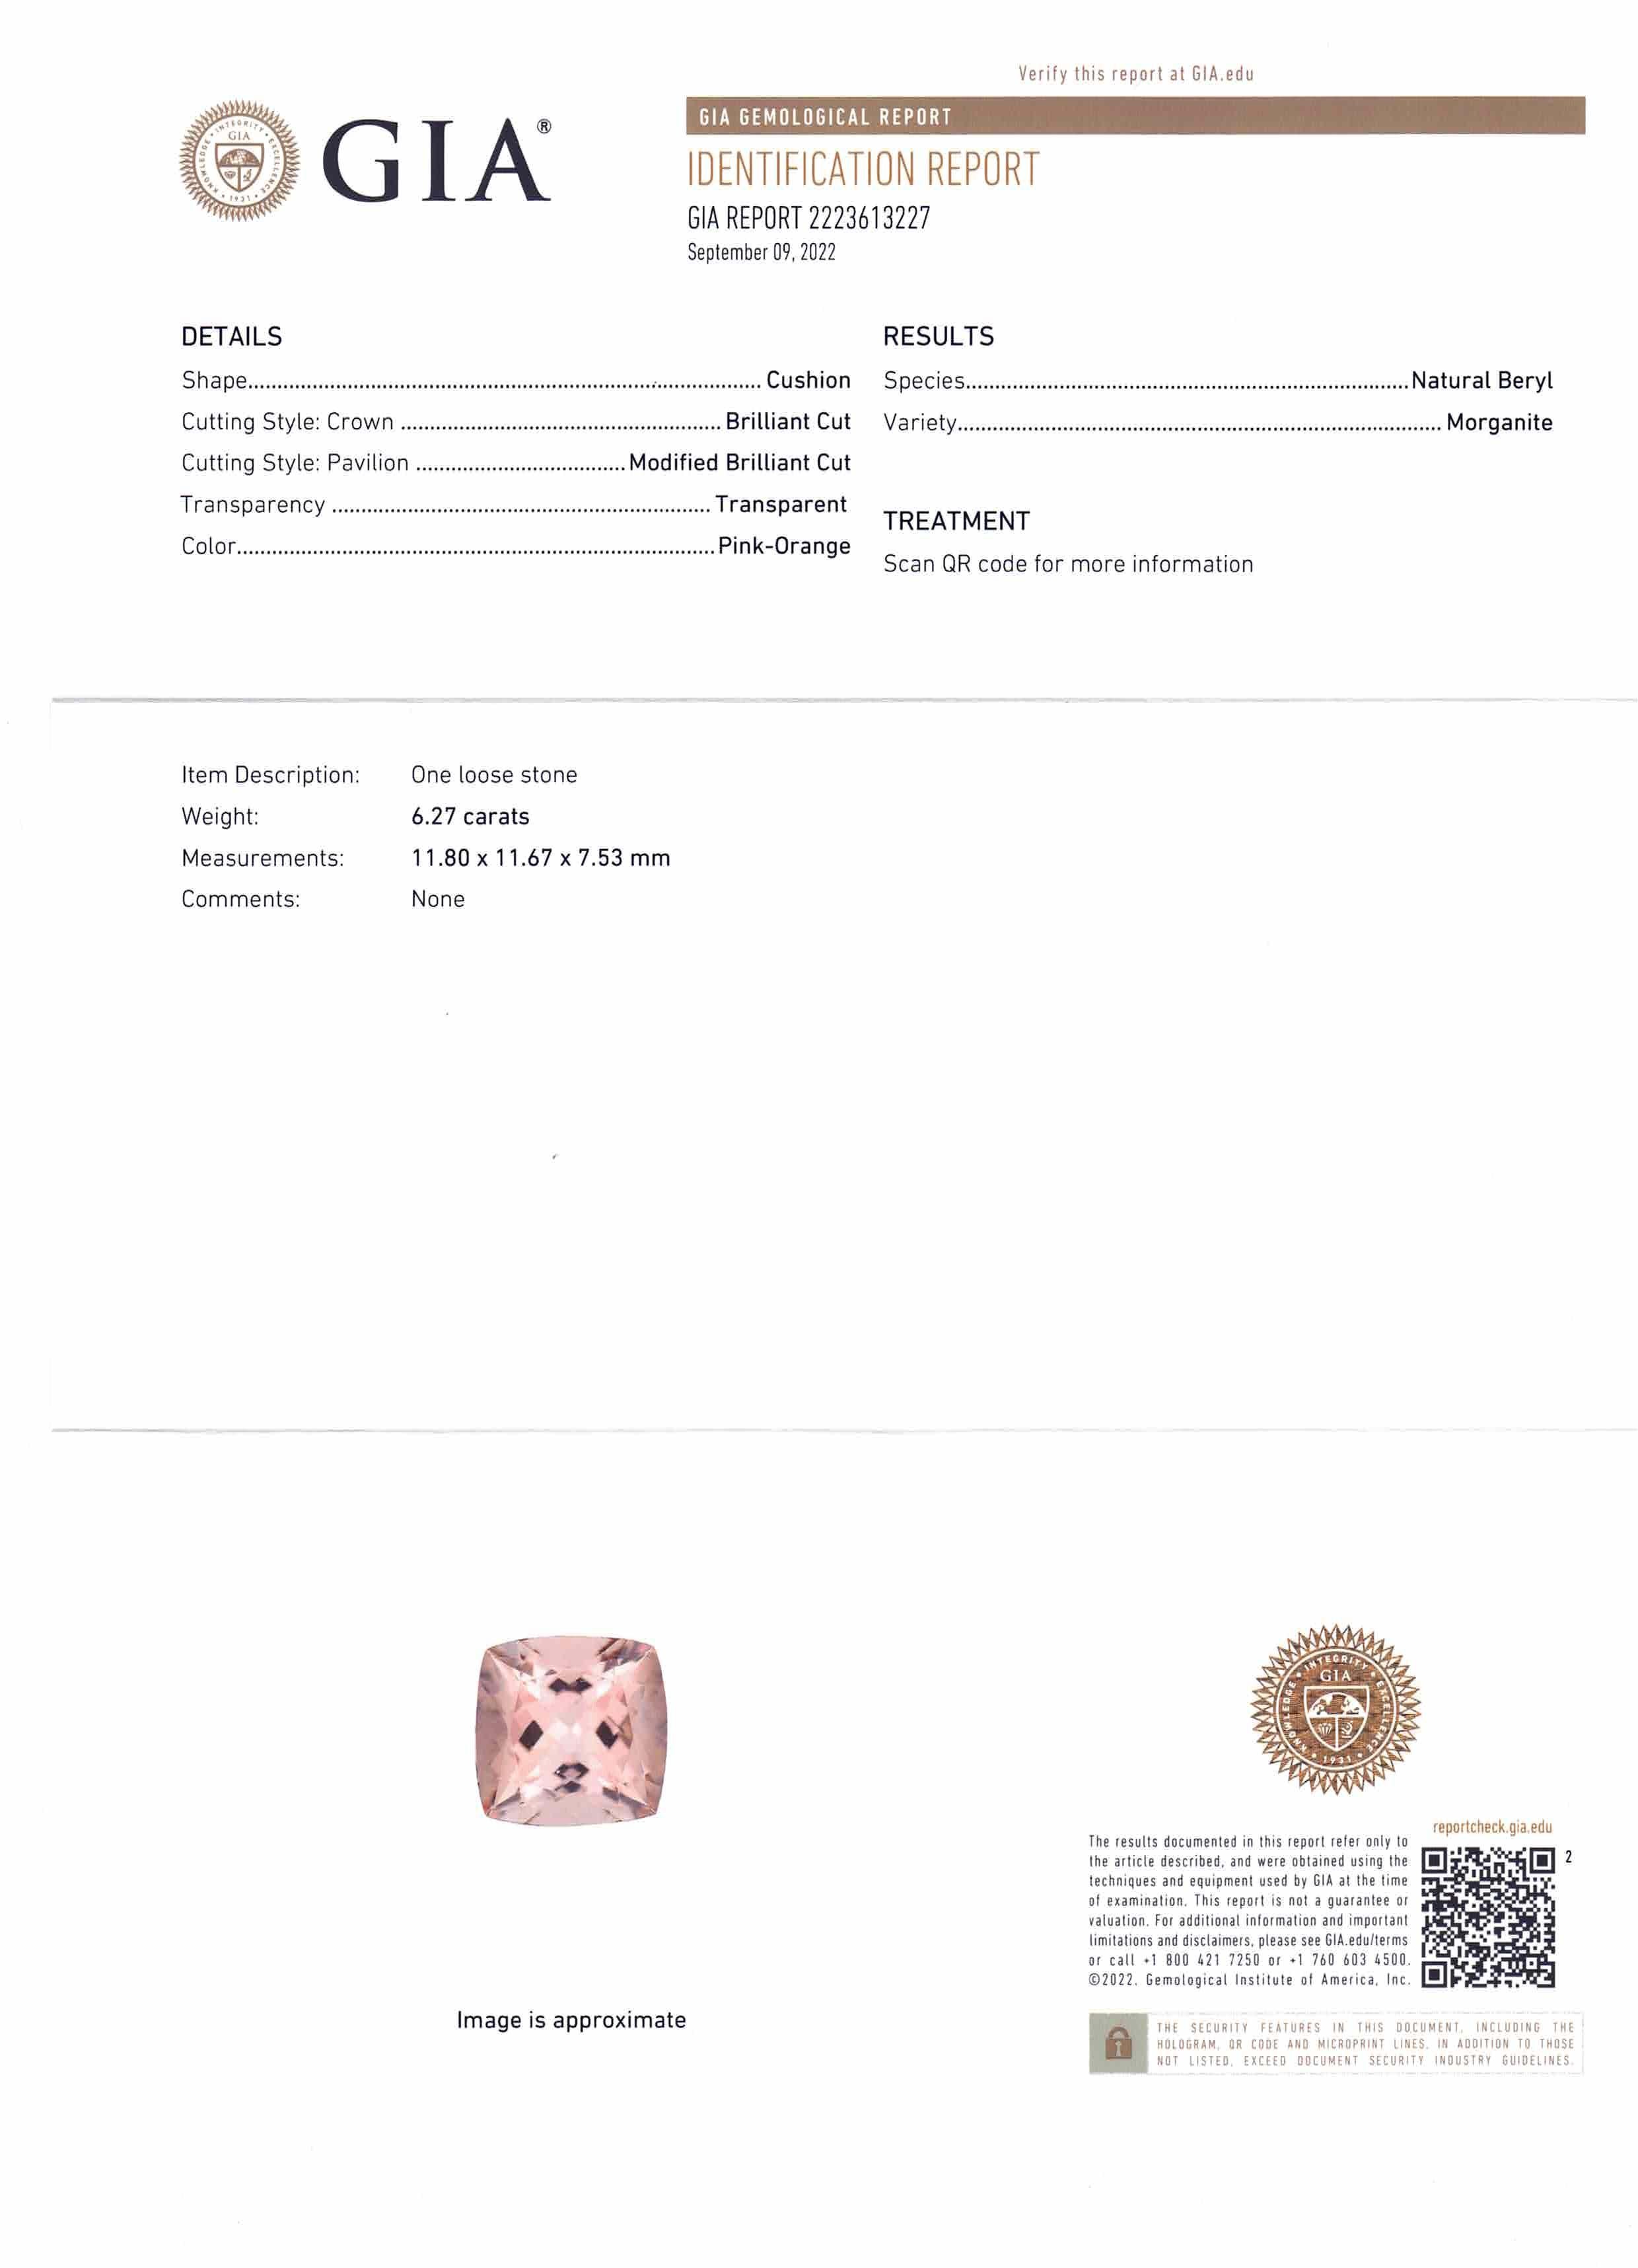 Morganite rose-orange taille coussin de 6,27 carats certifiée GIA Neuf - En vente à Toronto, Ontario